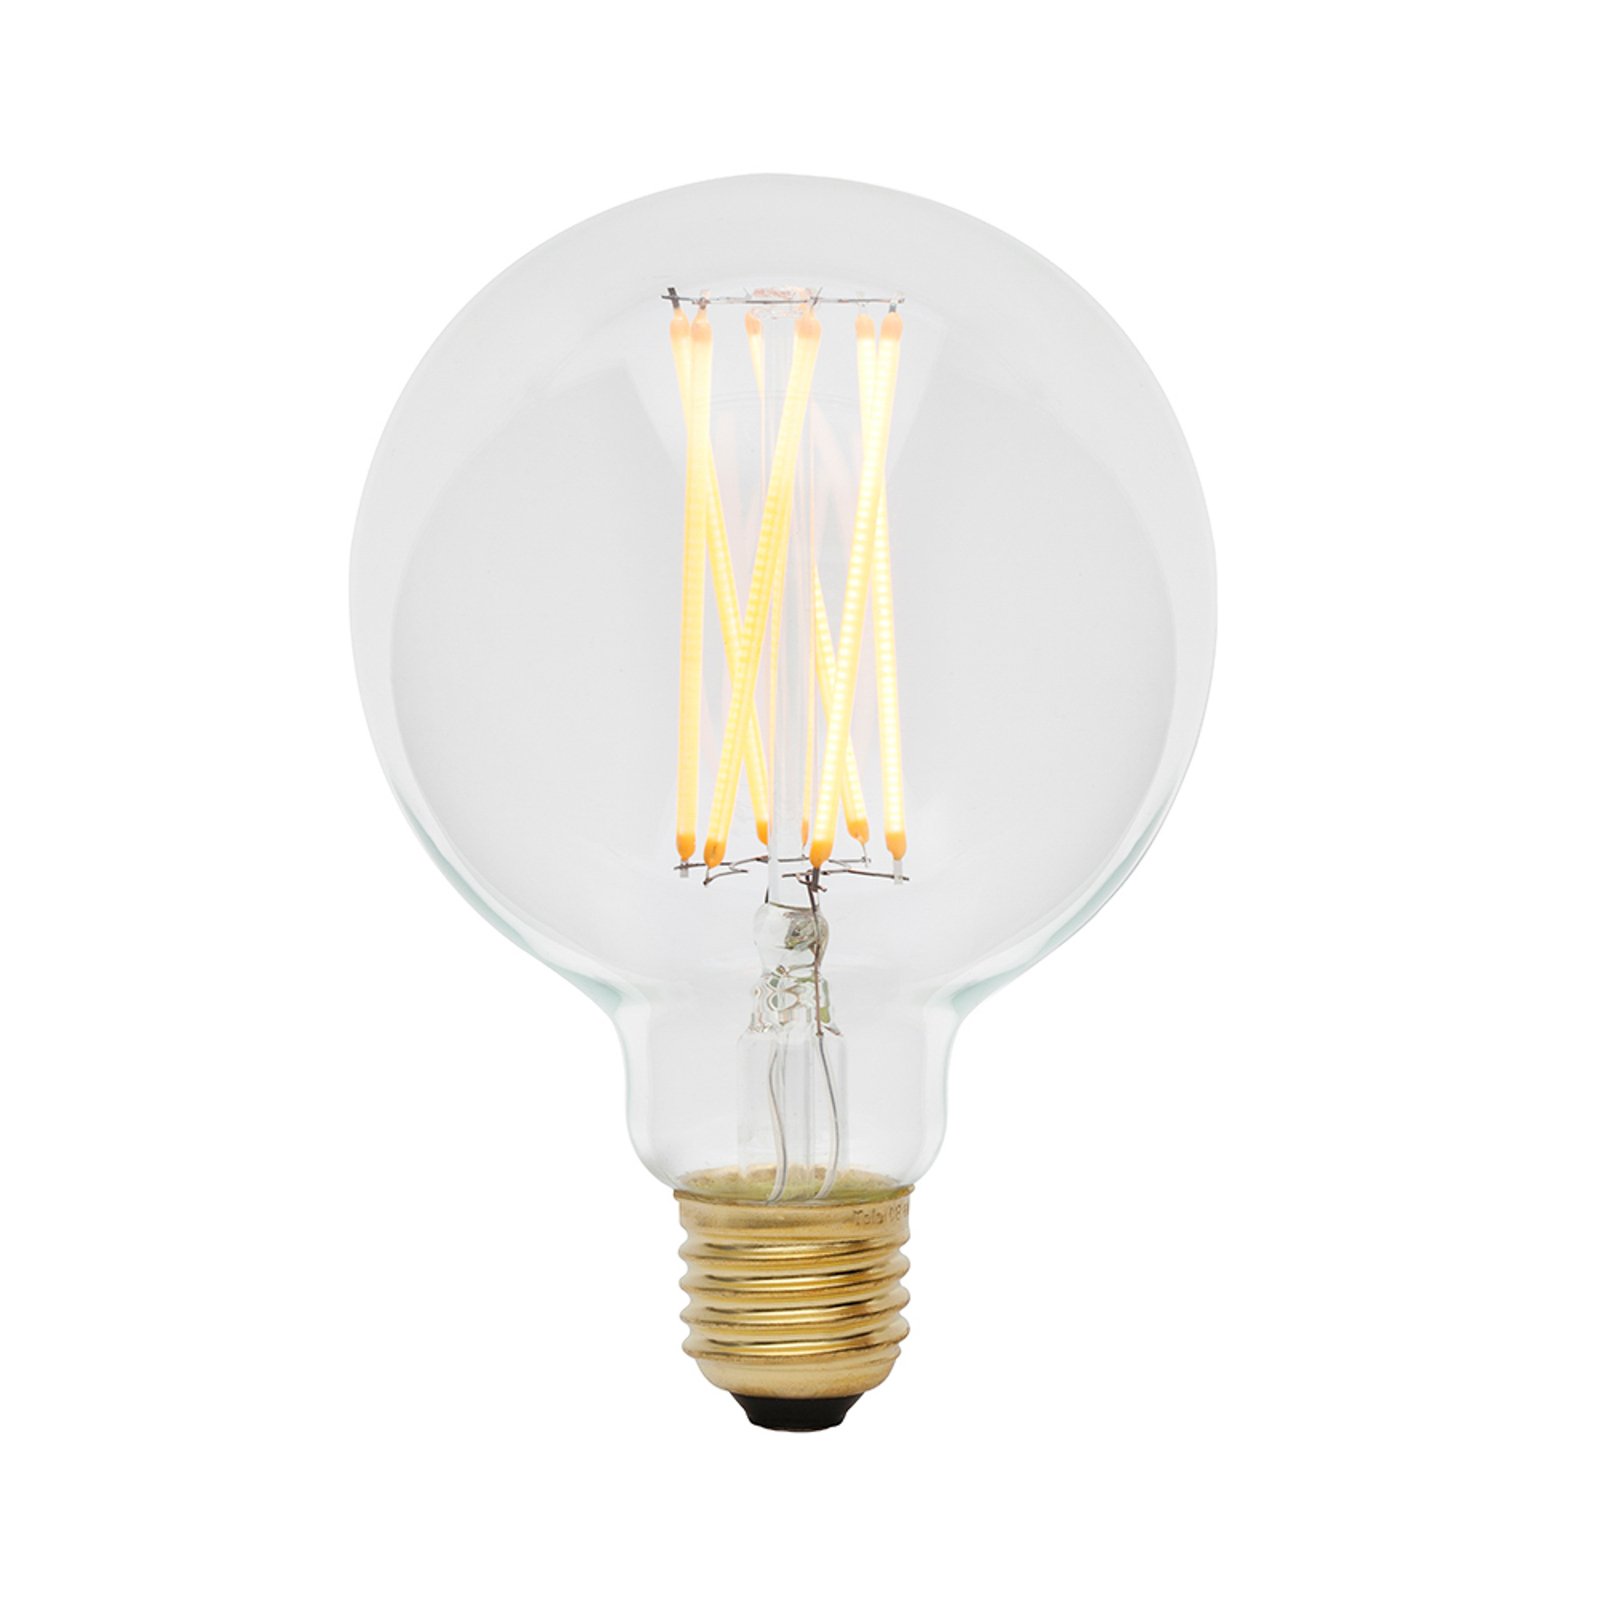 Tala LED globe bulb G95 filament clear E27 6W 2200K 480lm dimmable